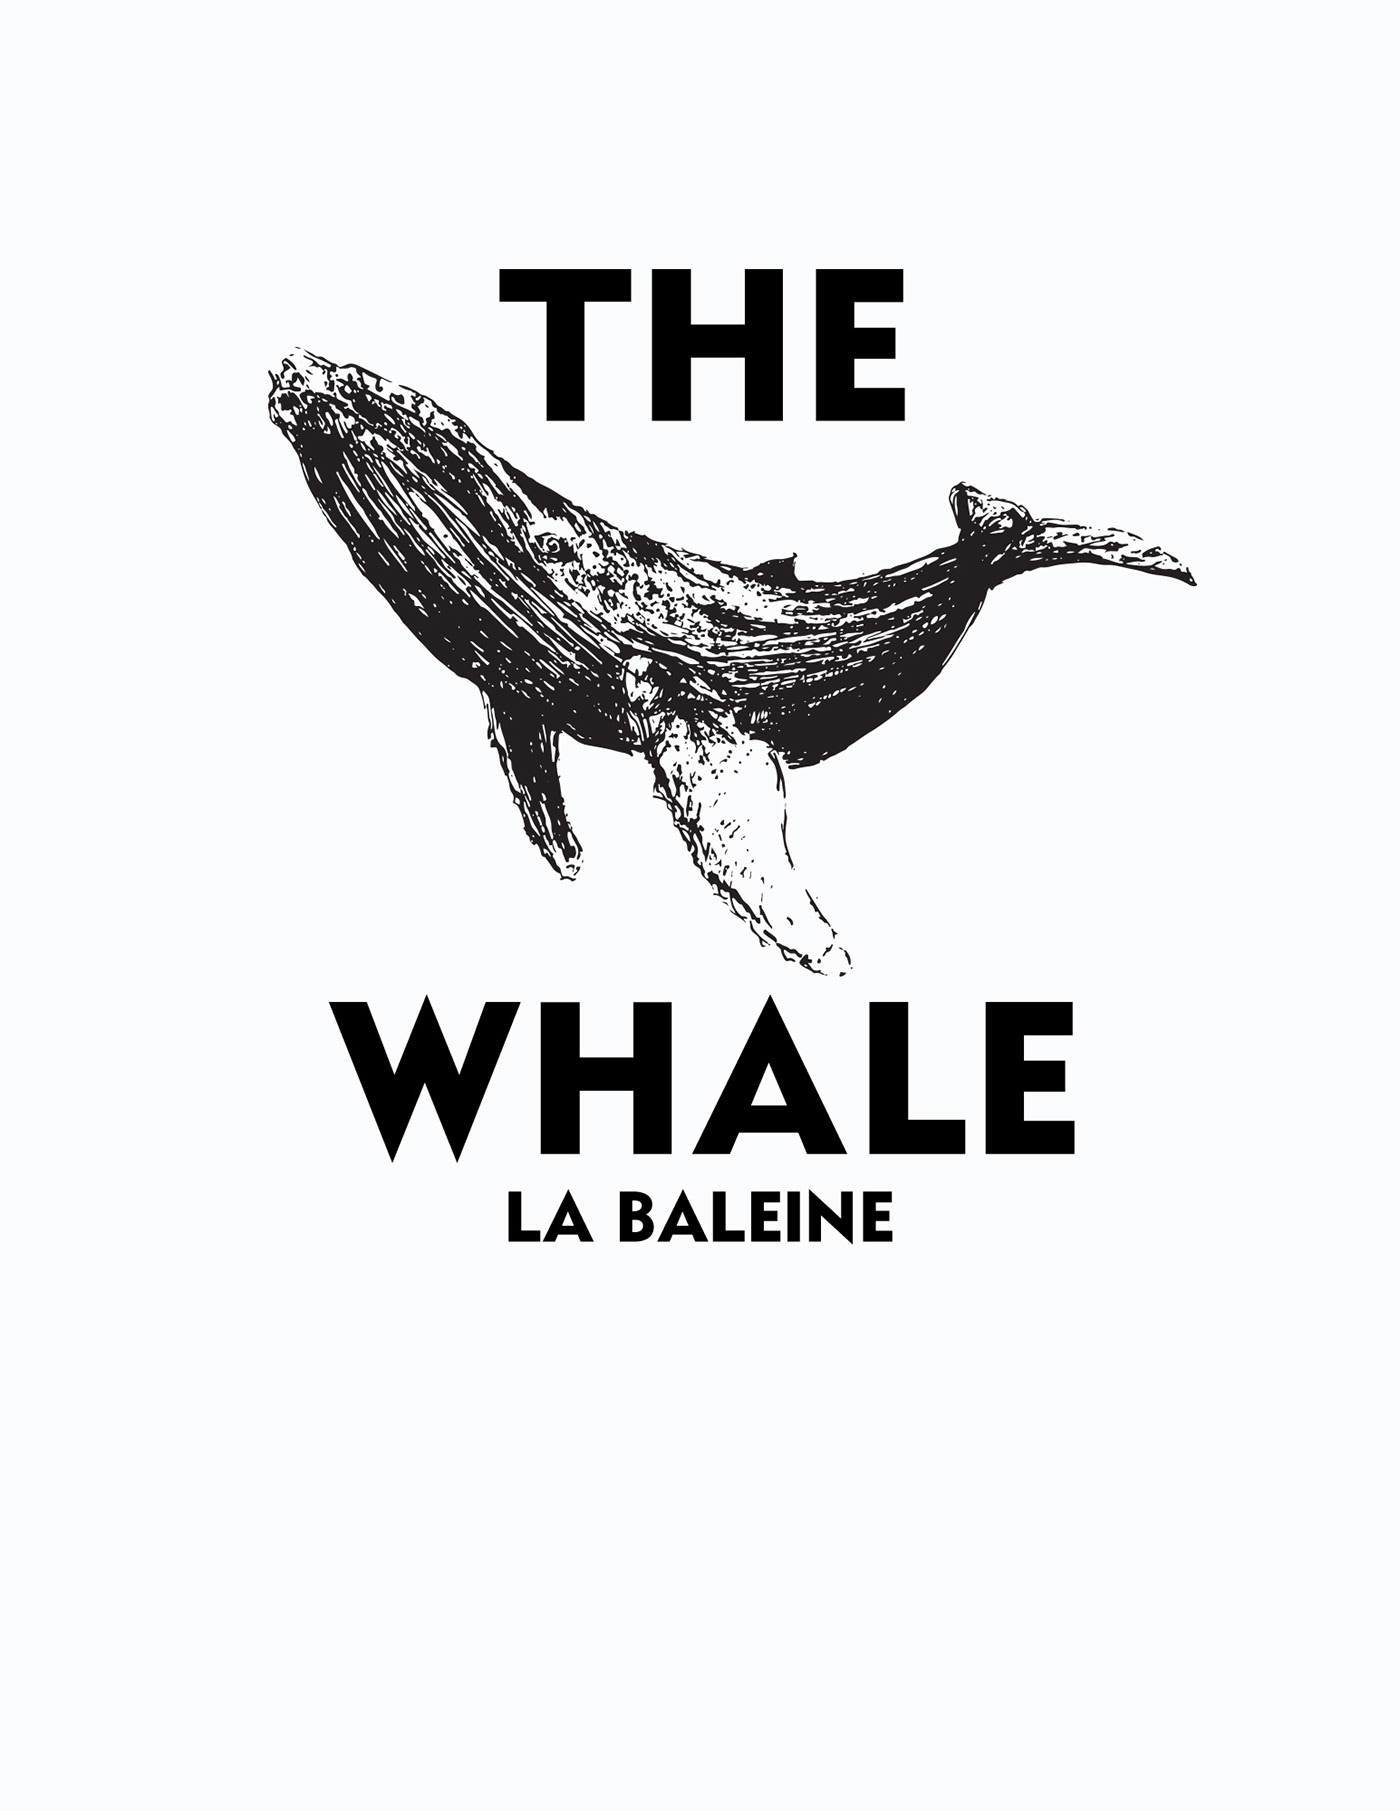 The Whale la baleine